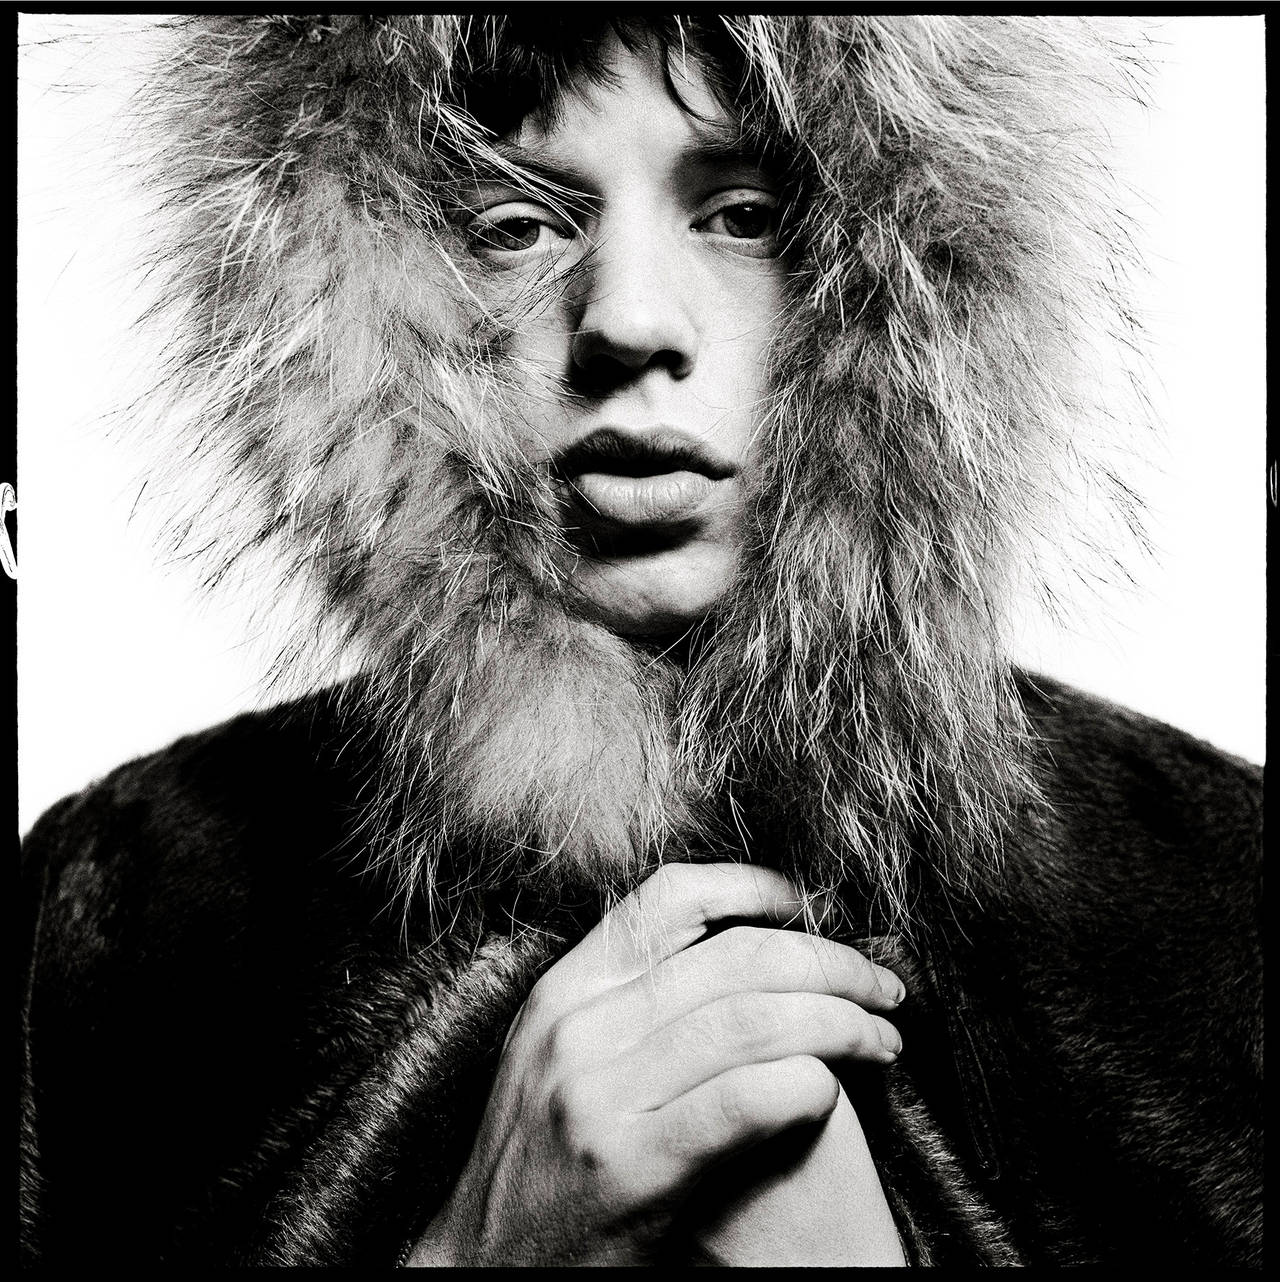 David Bailey Portrait Photograph - Mick Jagger - Fur Hood